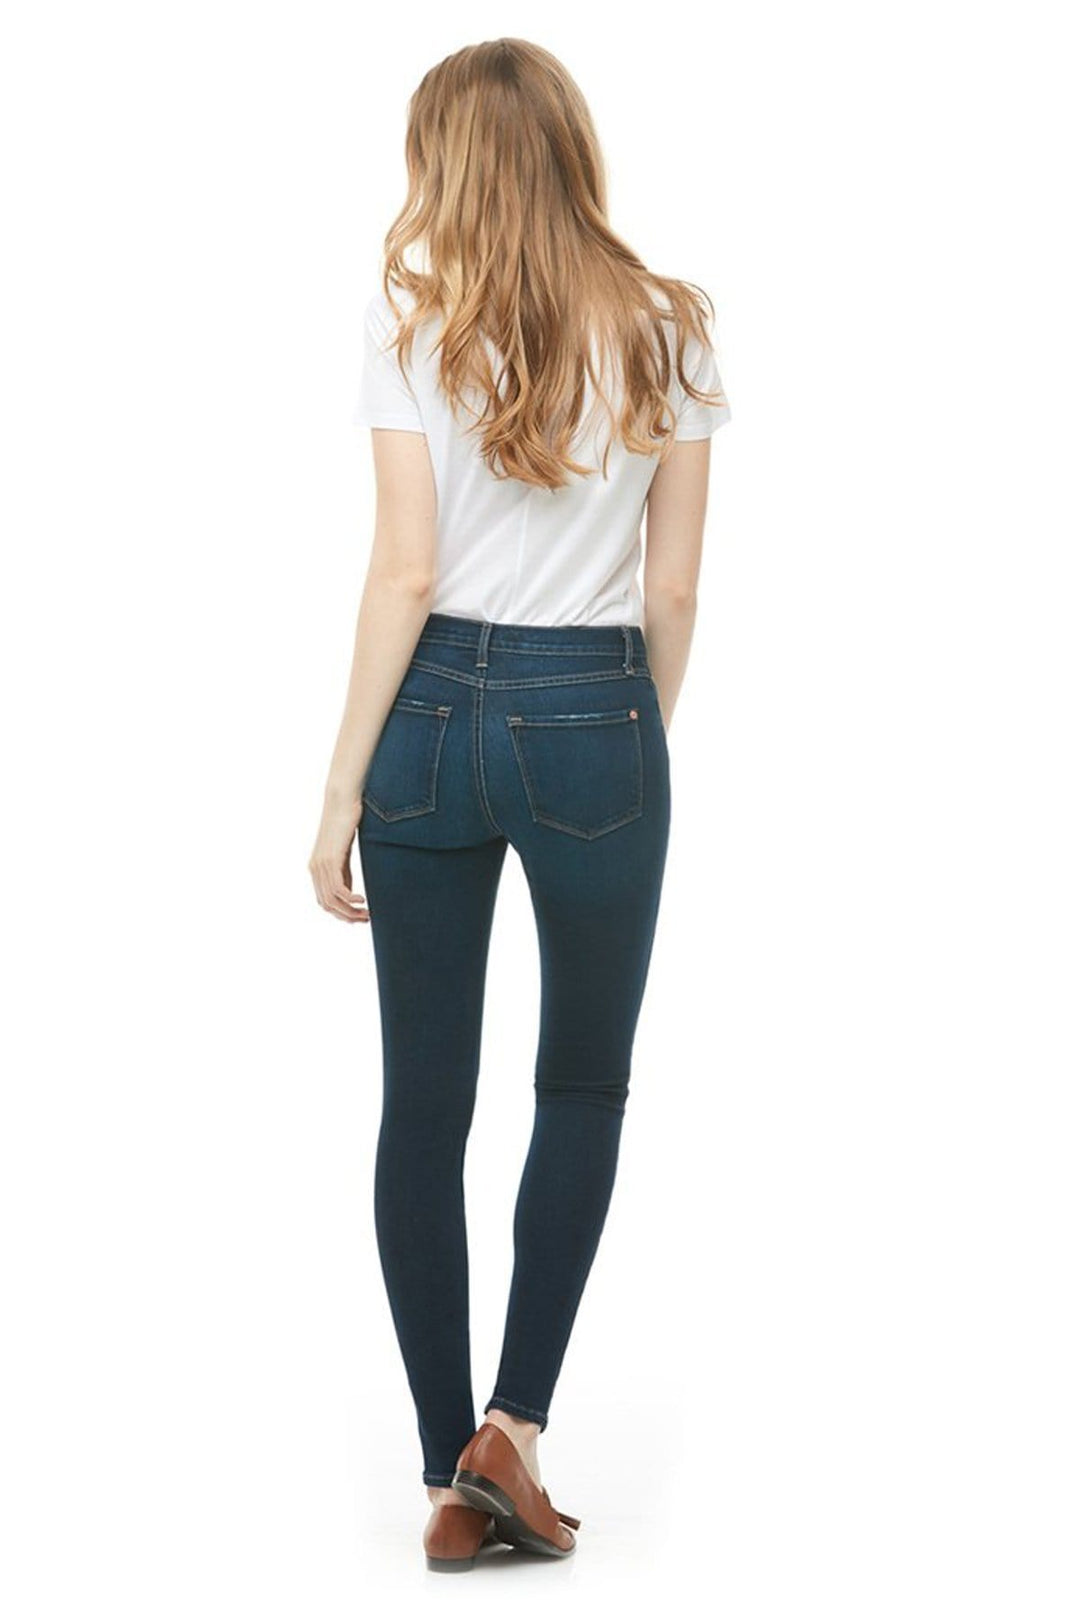 Yoga Jeans Rachel Skinny Jean - Classic Rise - Dark Indie